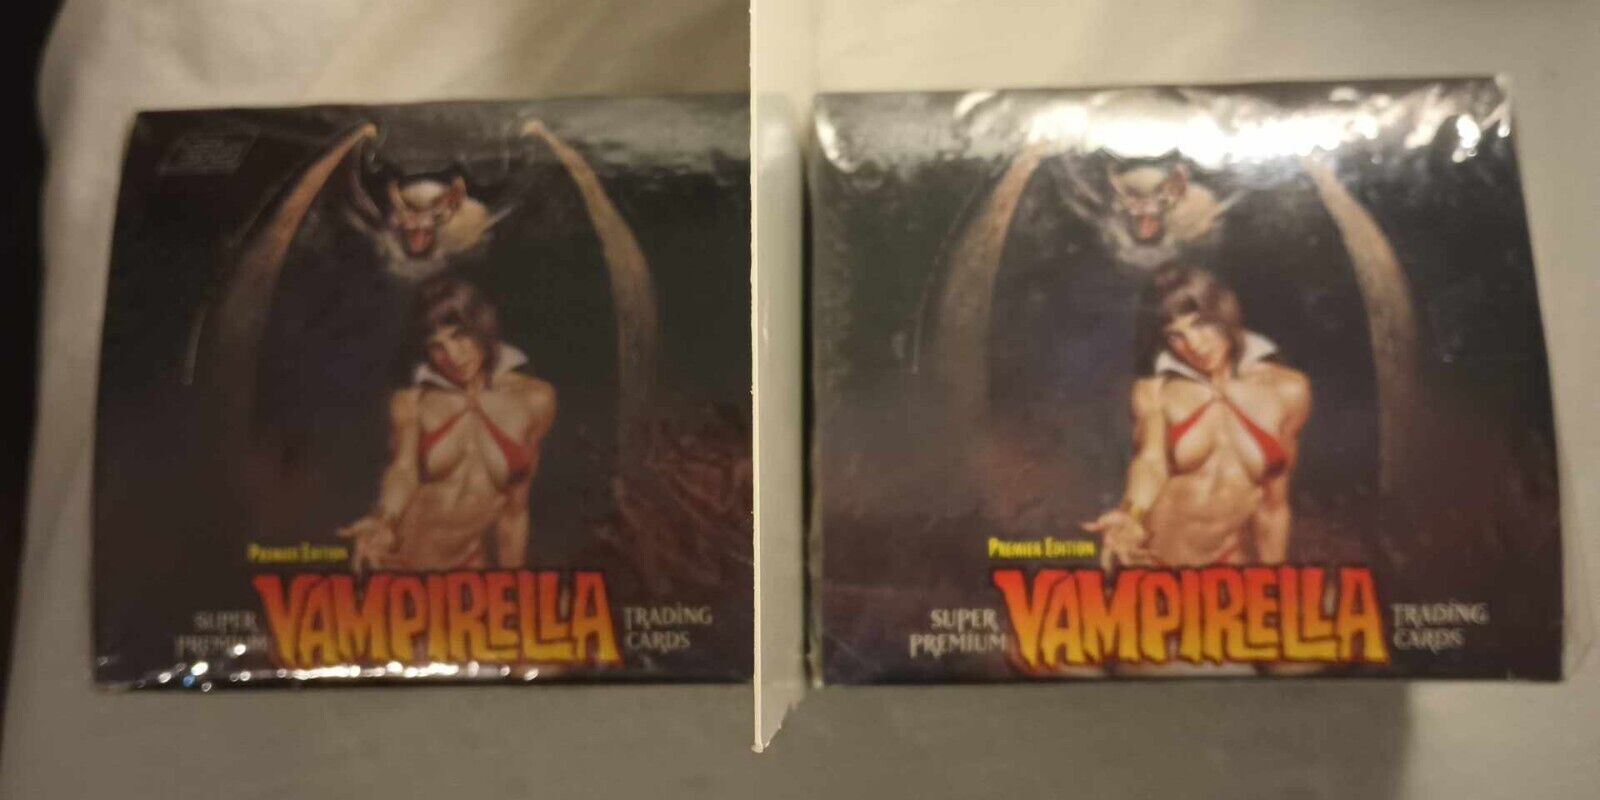 VAMPIRELLA PREMIER EDITION TRADING CARDS Topps 1995 Harris Factory-Sealed Box